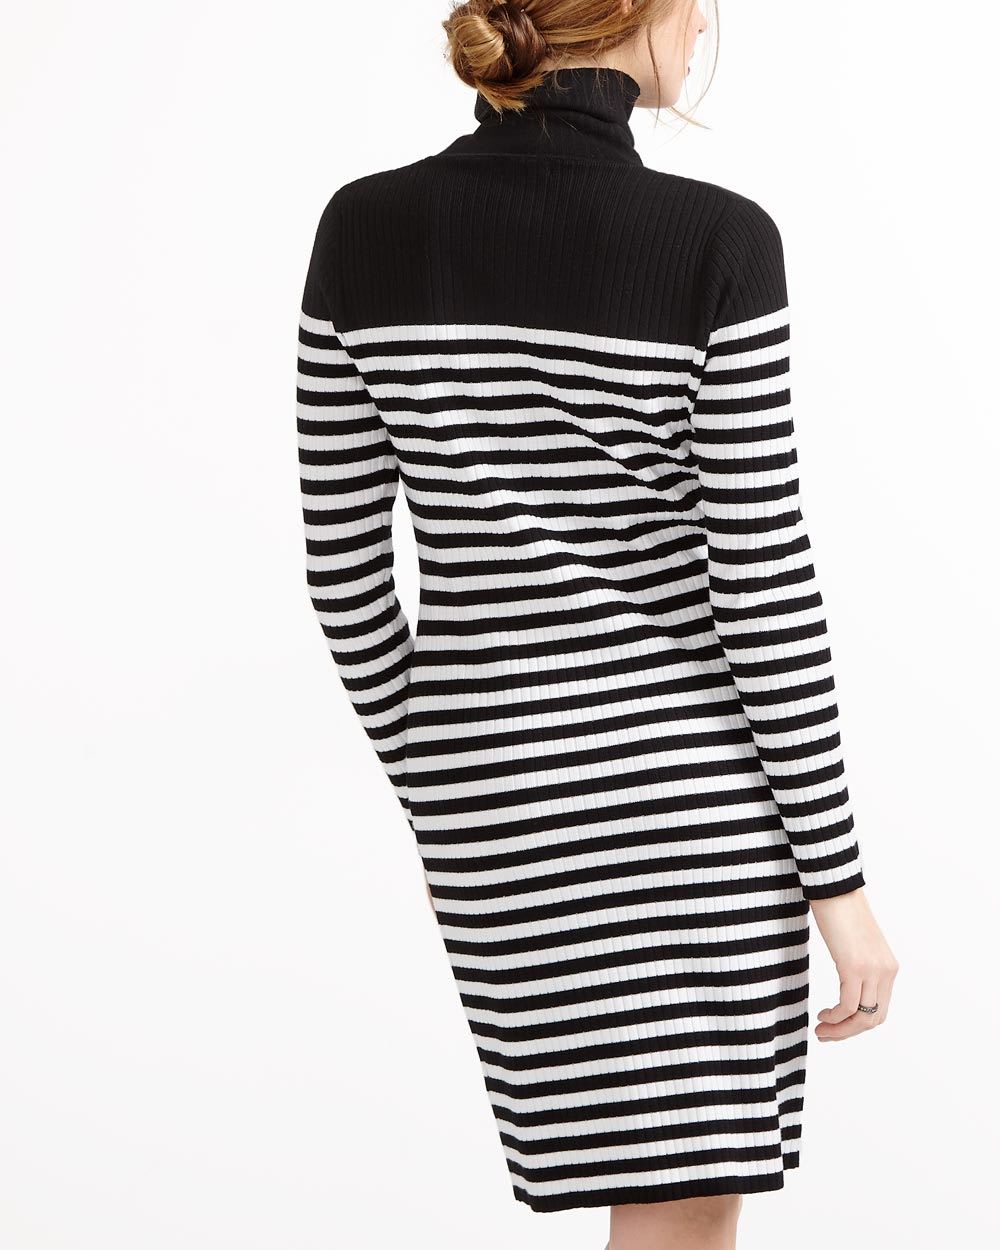 Turtleneck sweater dress topshop for women stores